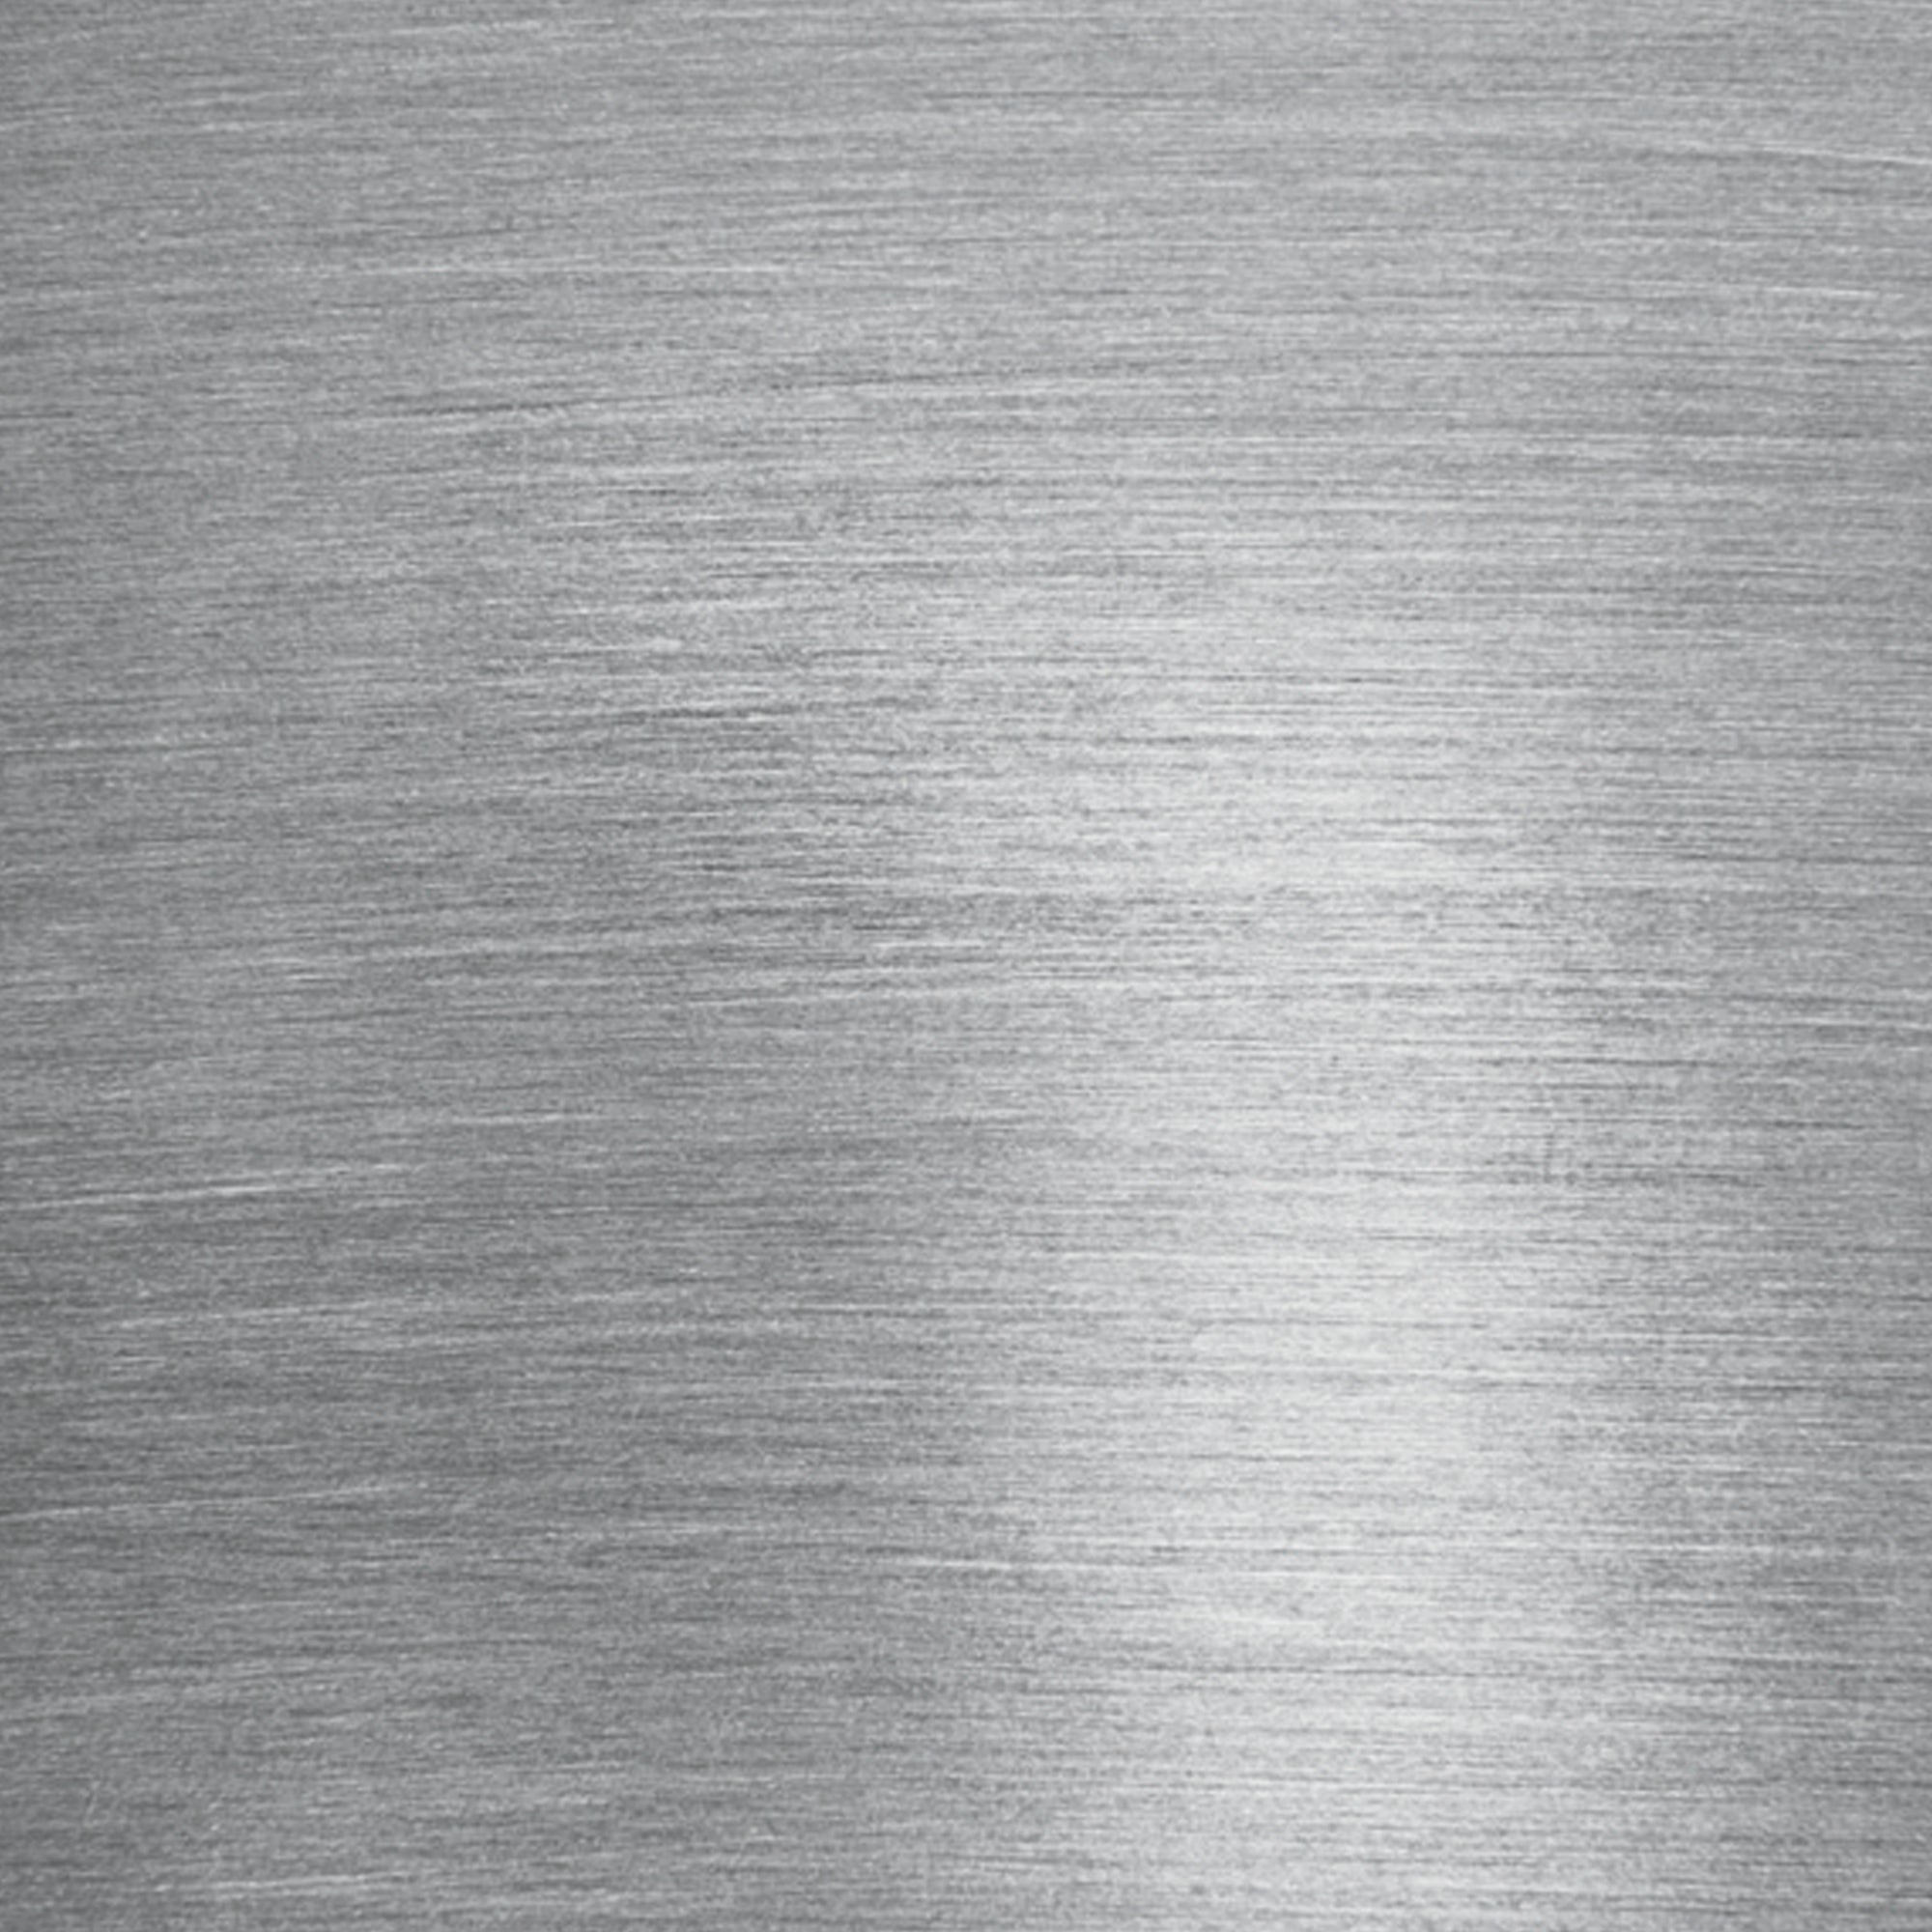 Blanco Artona Soap Dispenser - PVD Steel, 442047